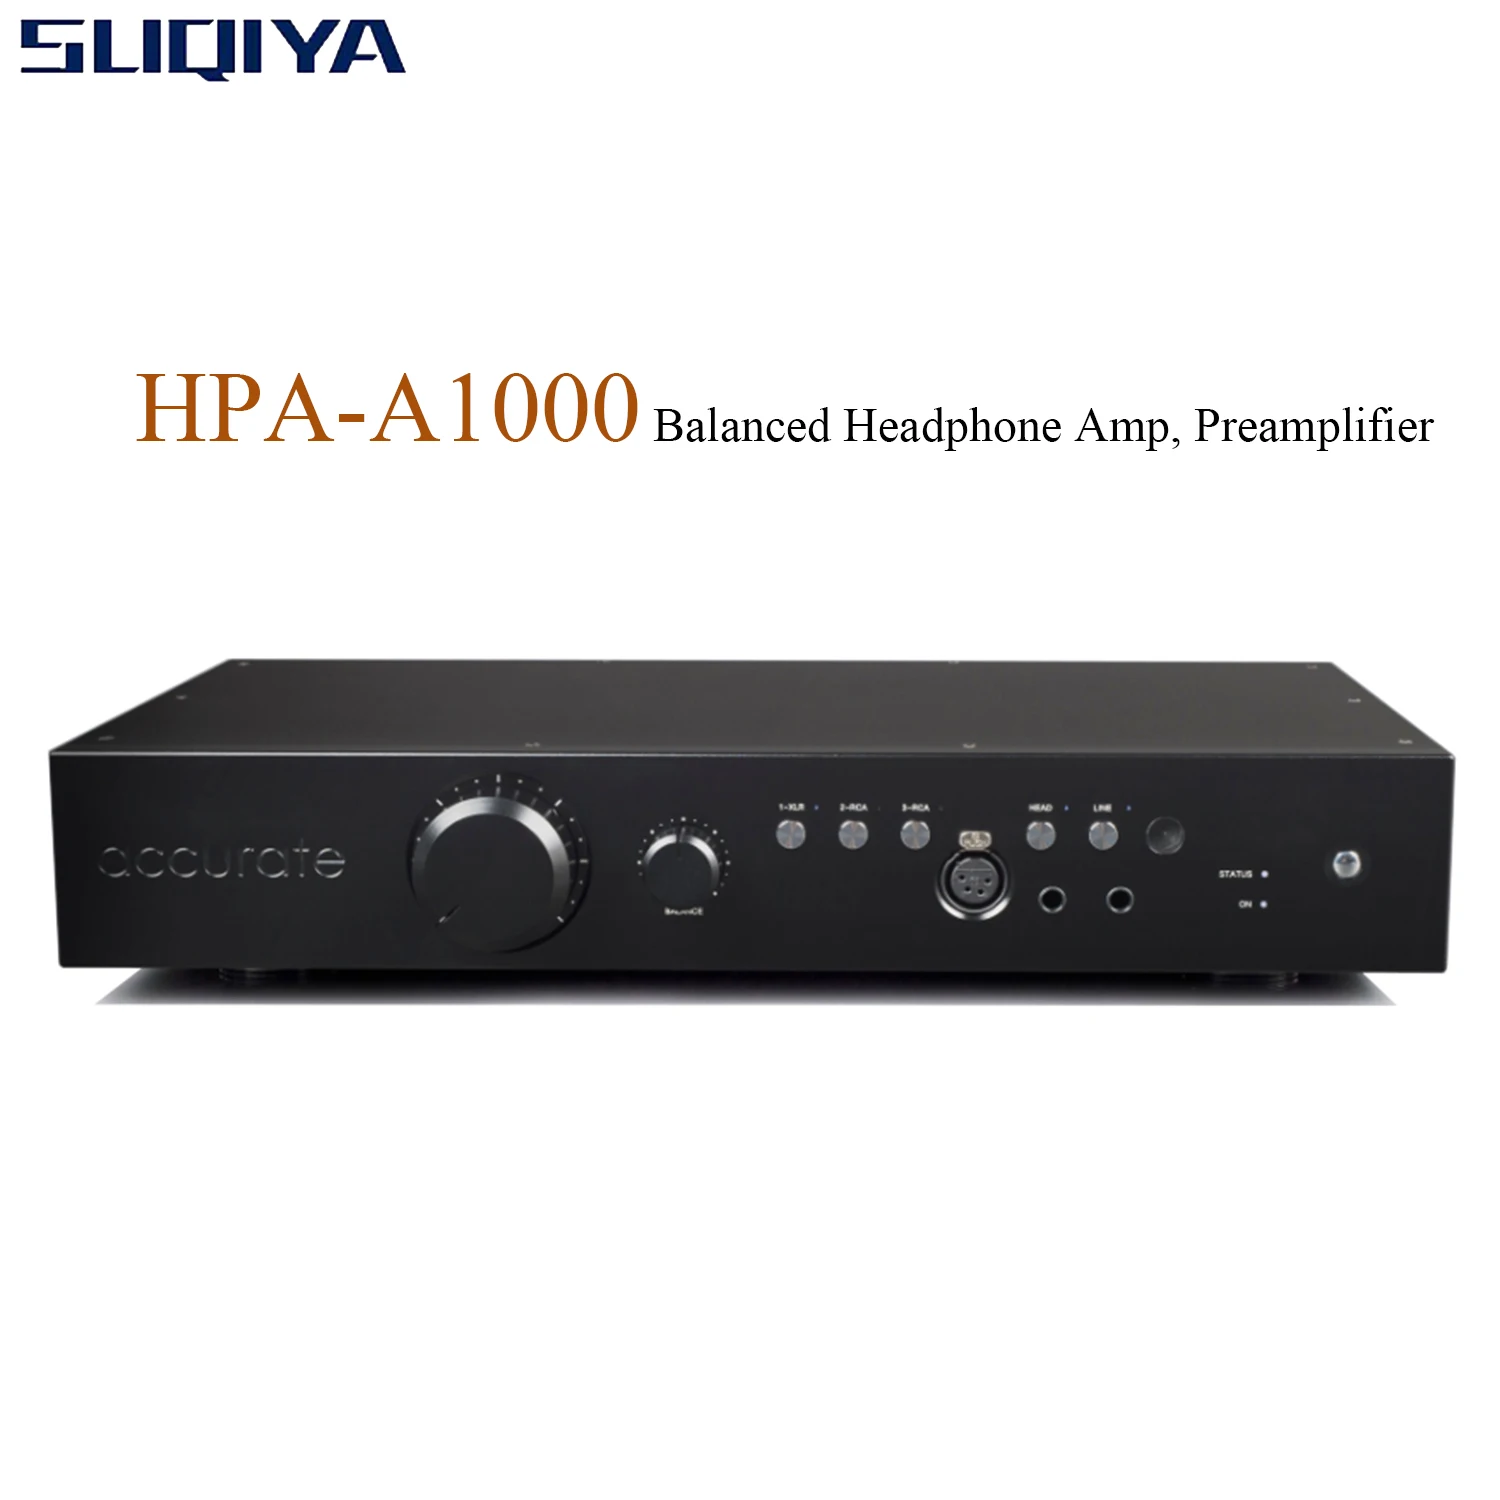 SUQIYA-New HPA-A1000 Balanced Preamplifier, Dynamic, Flat-panel Universal Headphone Amplifier, Input Sensitivity: +6 dBu